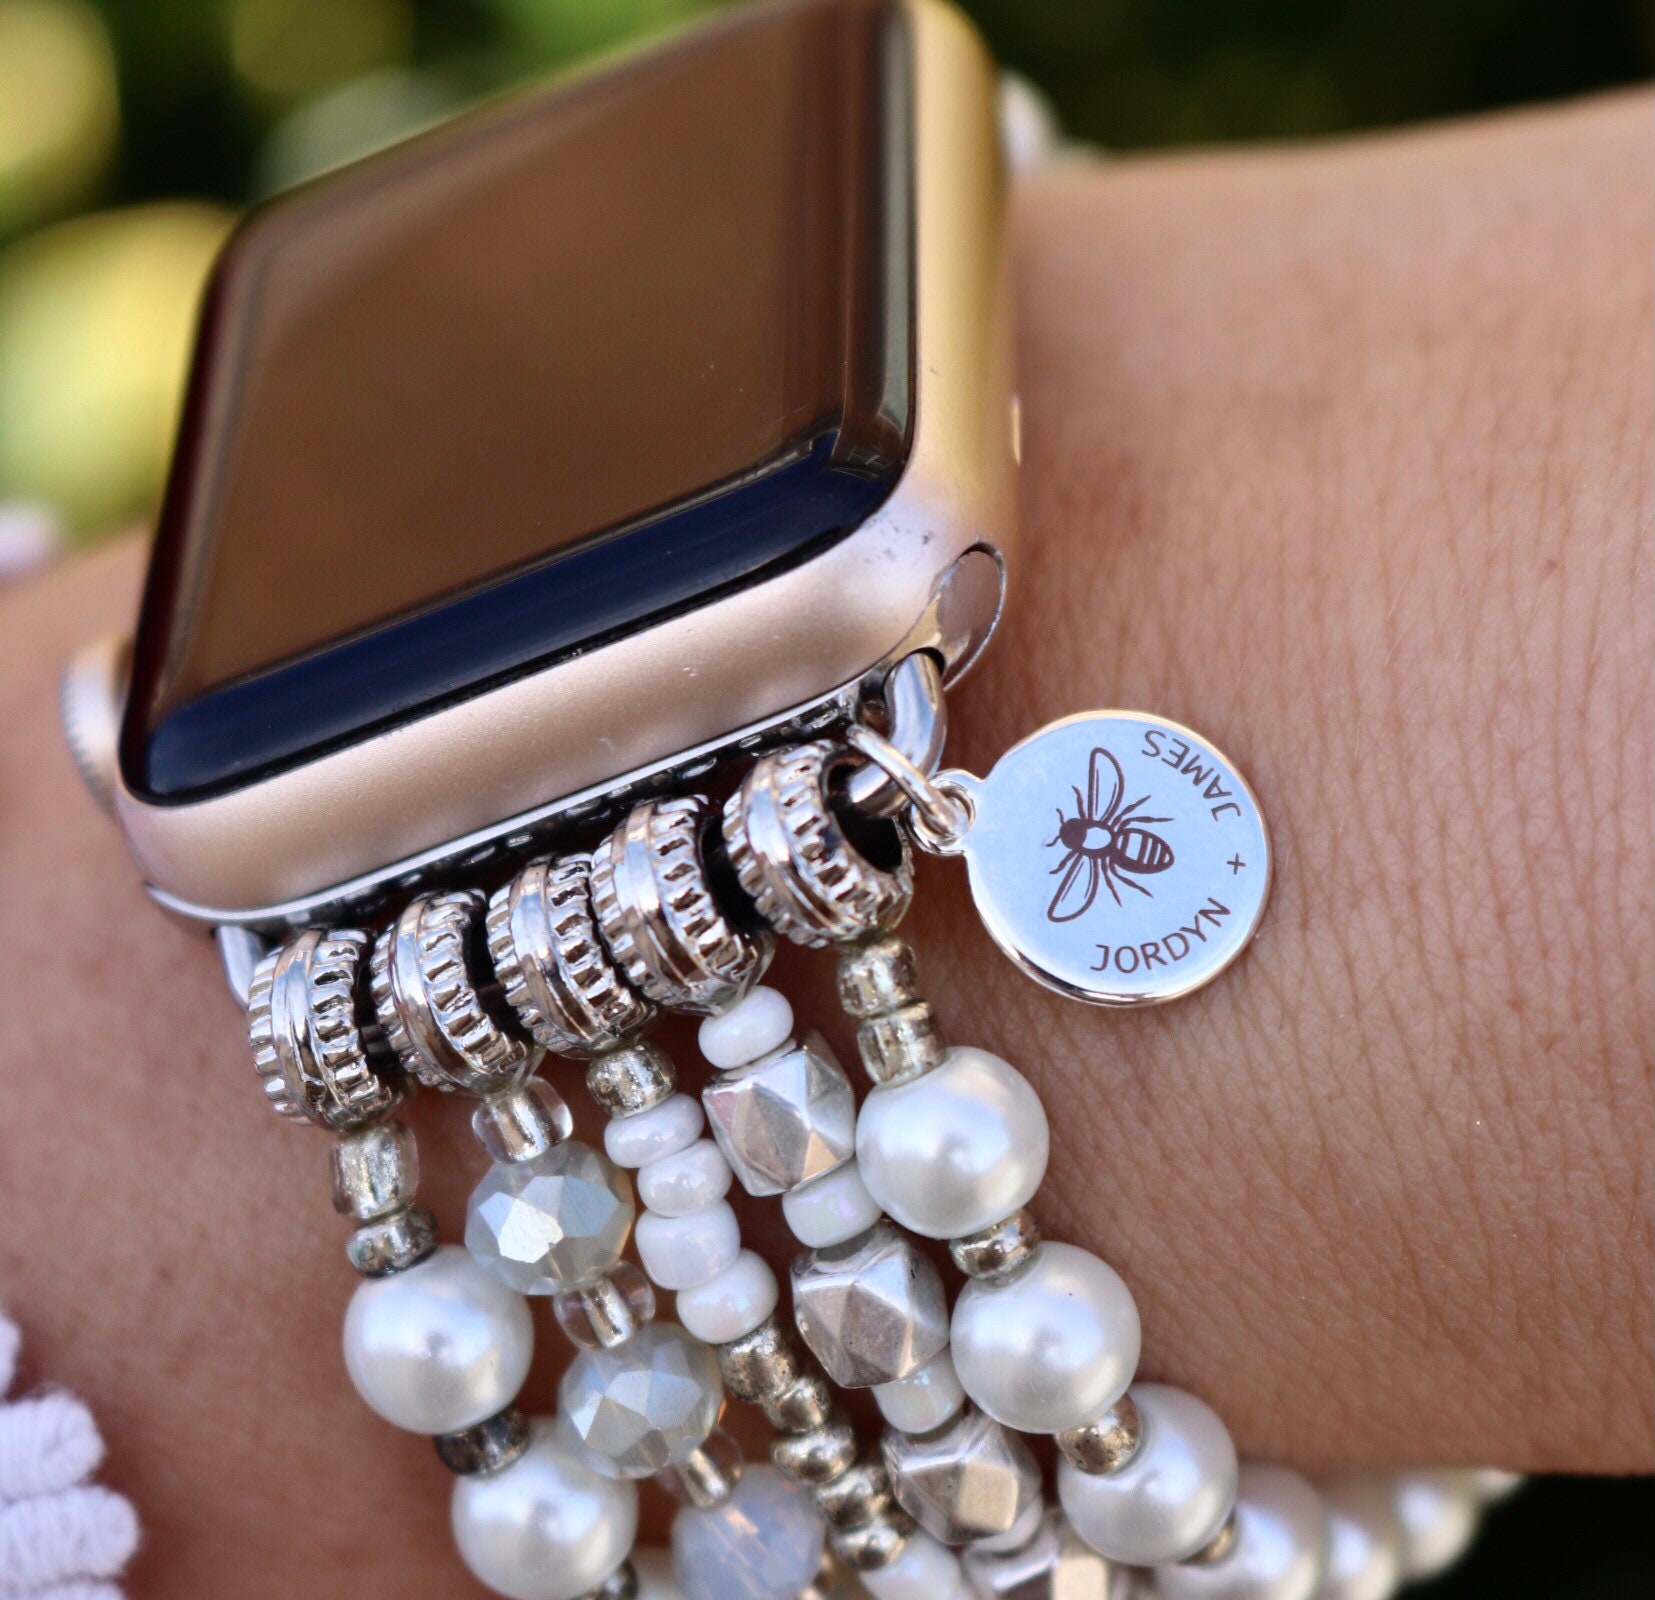 Dress Bracelet Apple Watch Bands – Retro Gold